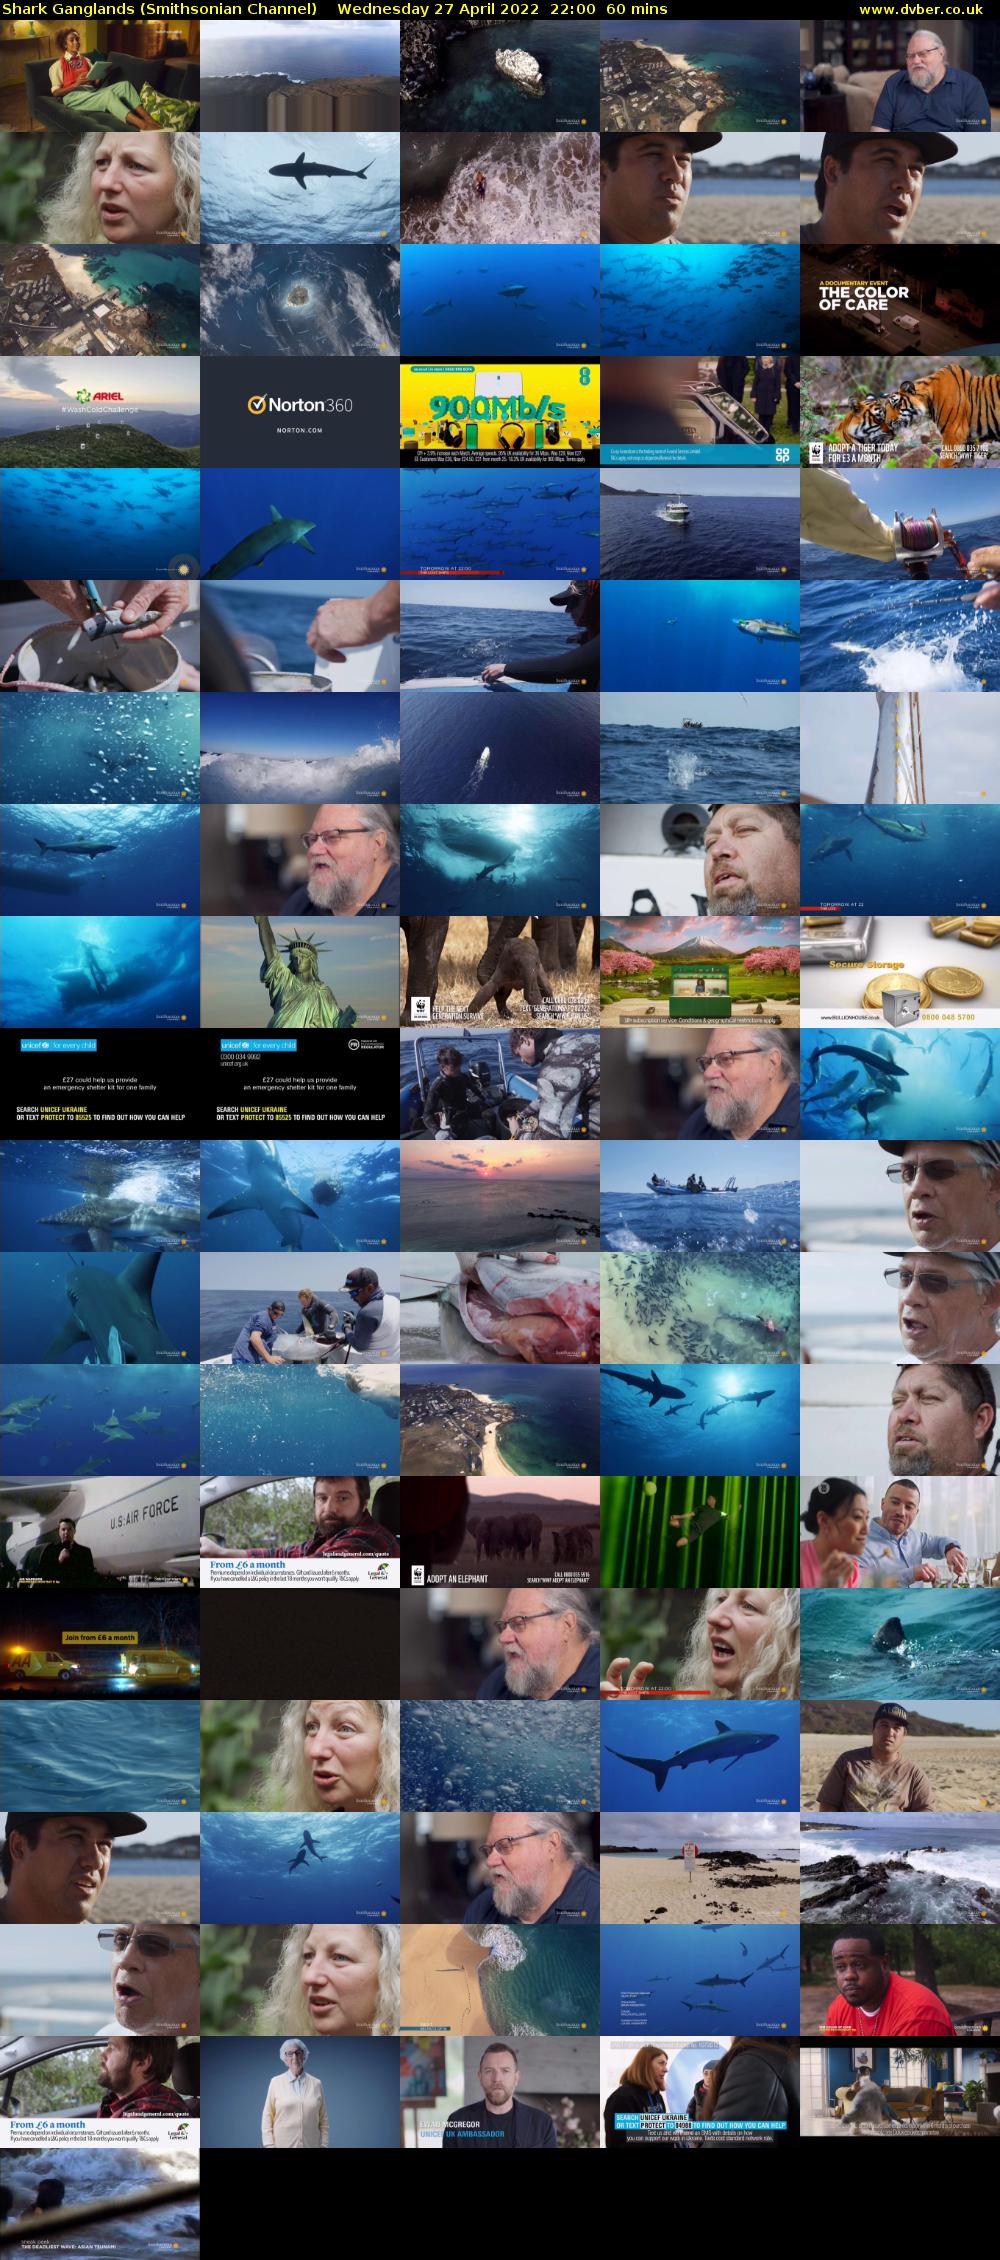 Shark Ganglands (Smithsonian Channel) Wednesday 27 April 2022 22:00 - 23:00